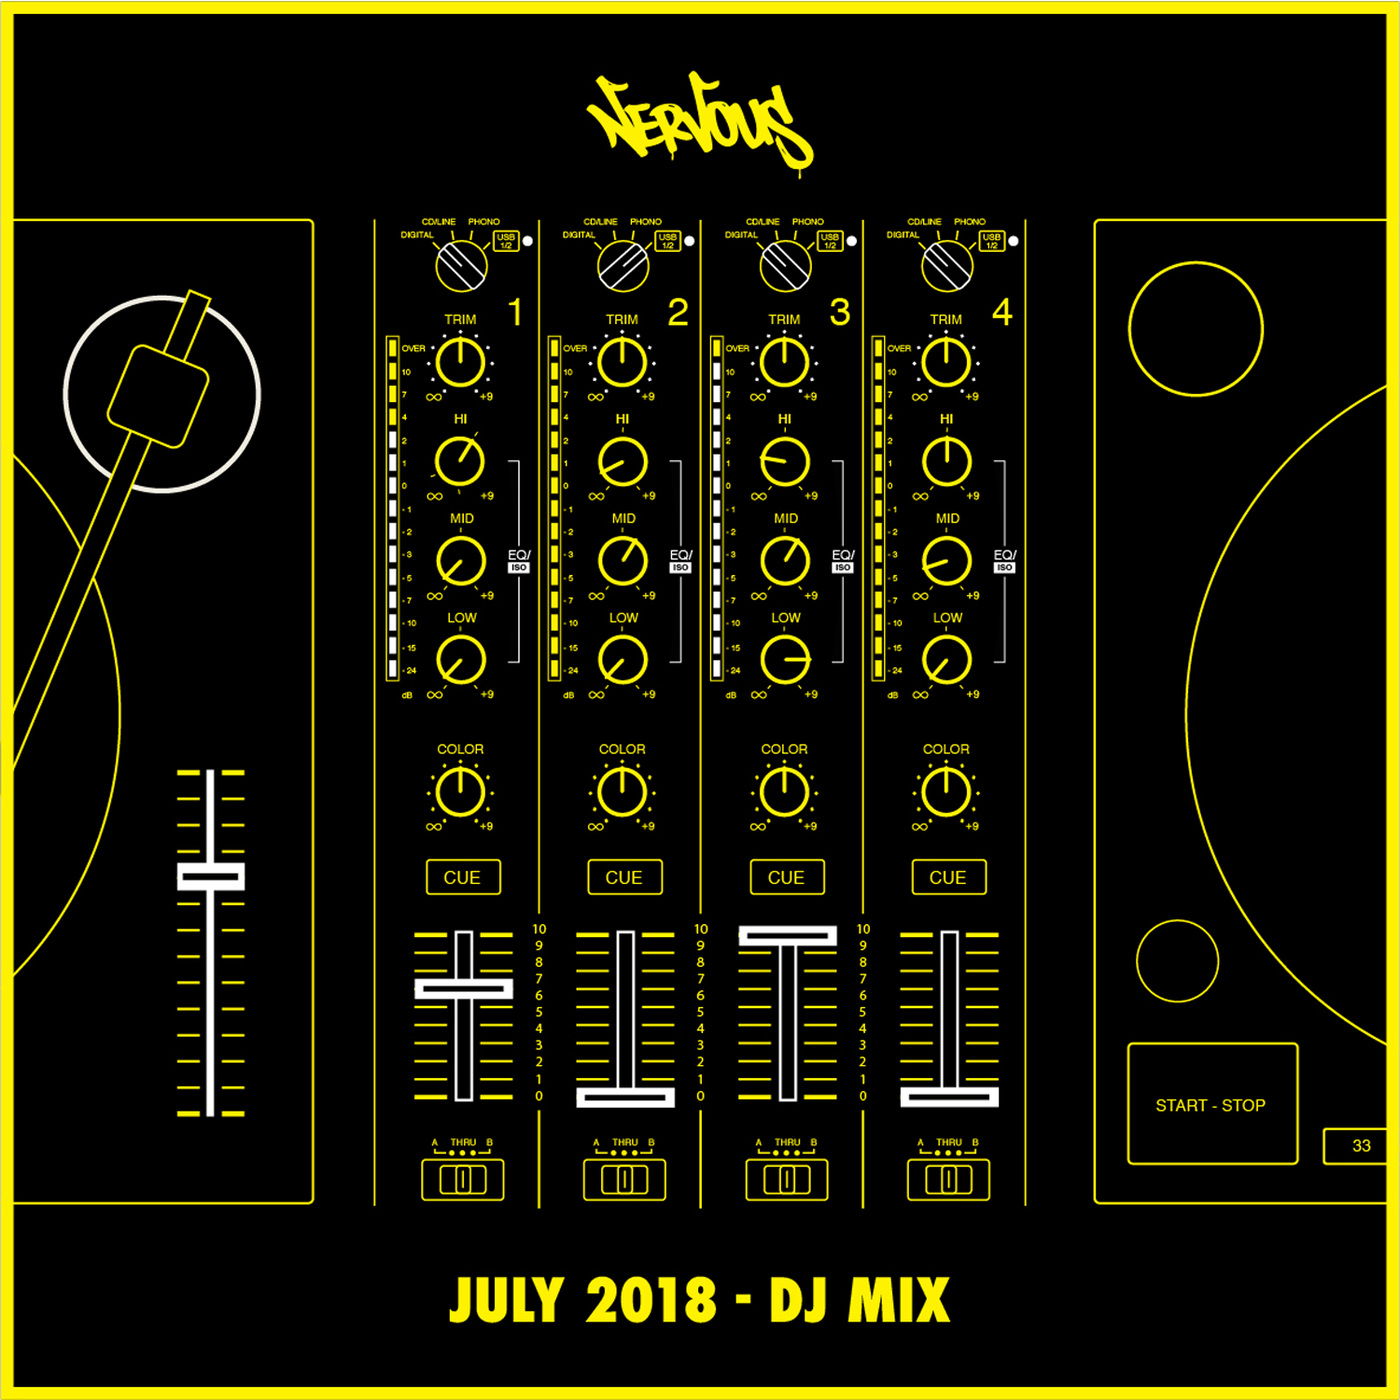 VA - Nervous July 2018: DJ Mix / Nervous Records